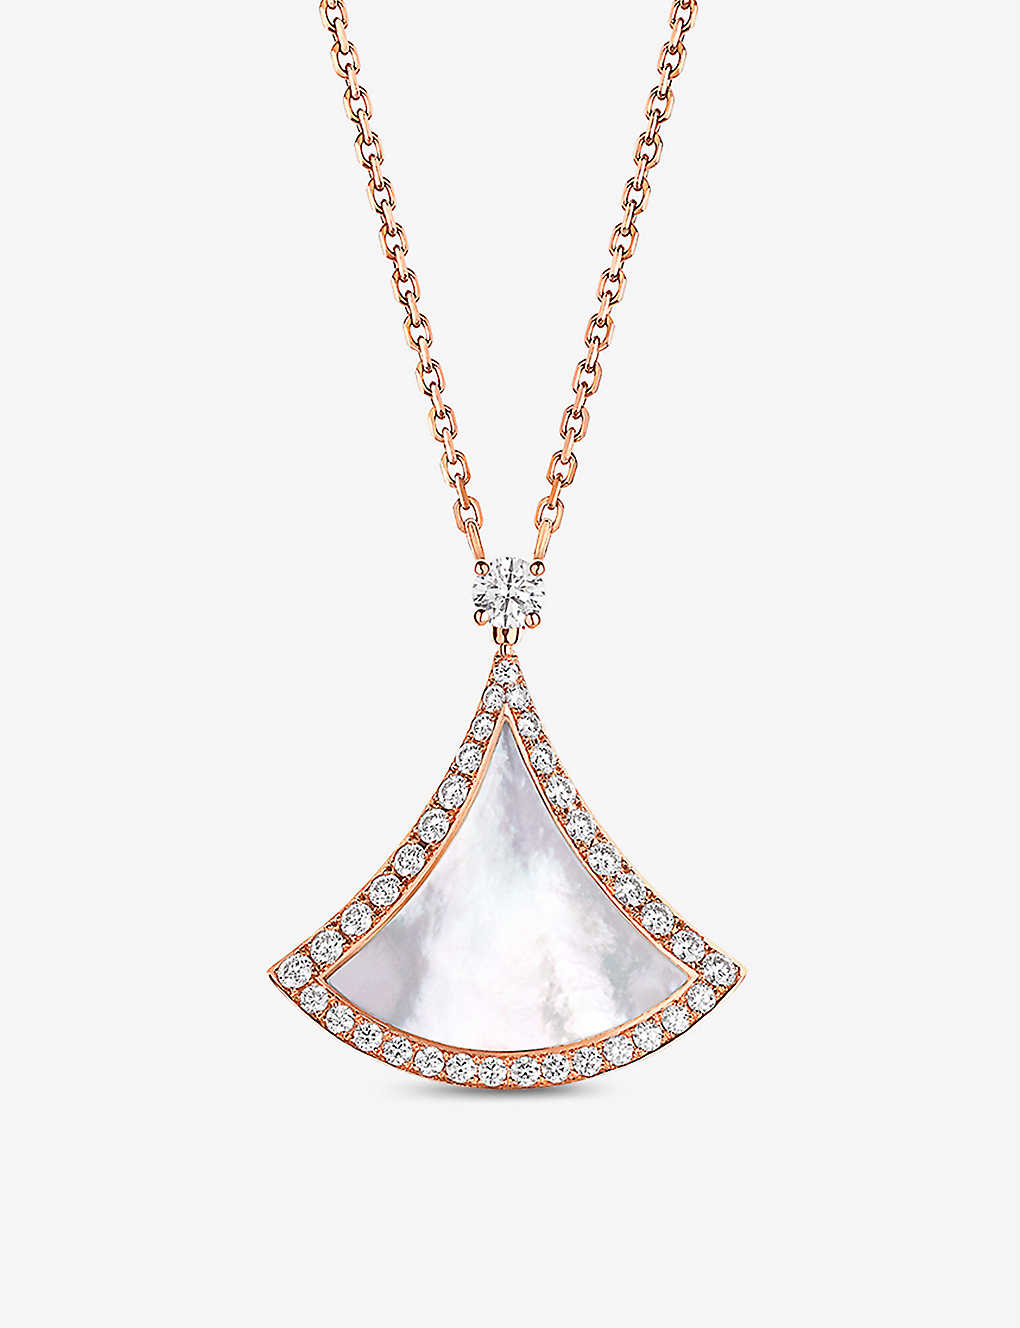 Bvlgari Women's Divas' Dream 18k Rose Gold, Mother-of-pearl, & Diamond Pendant Necklace